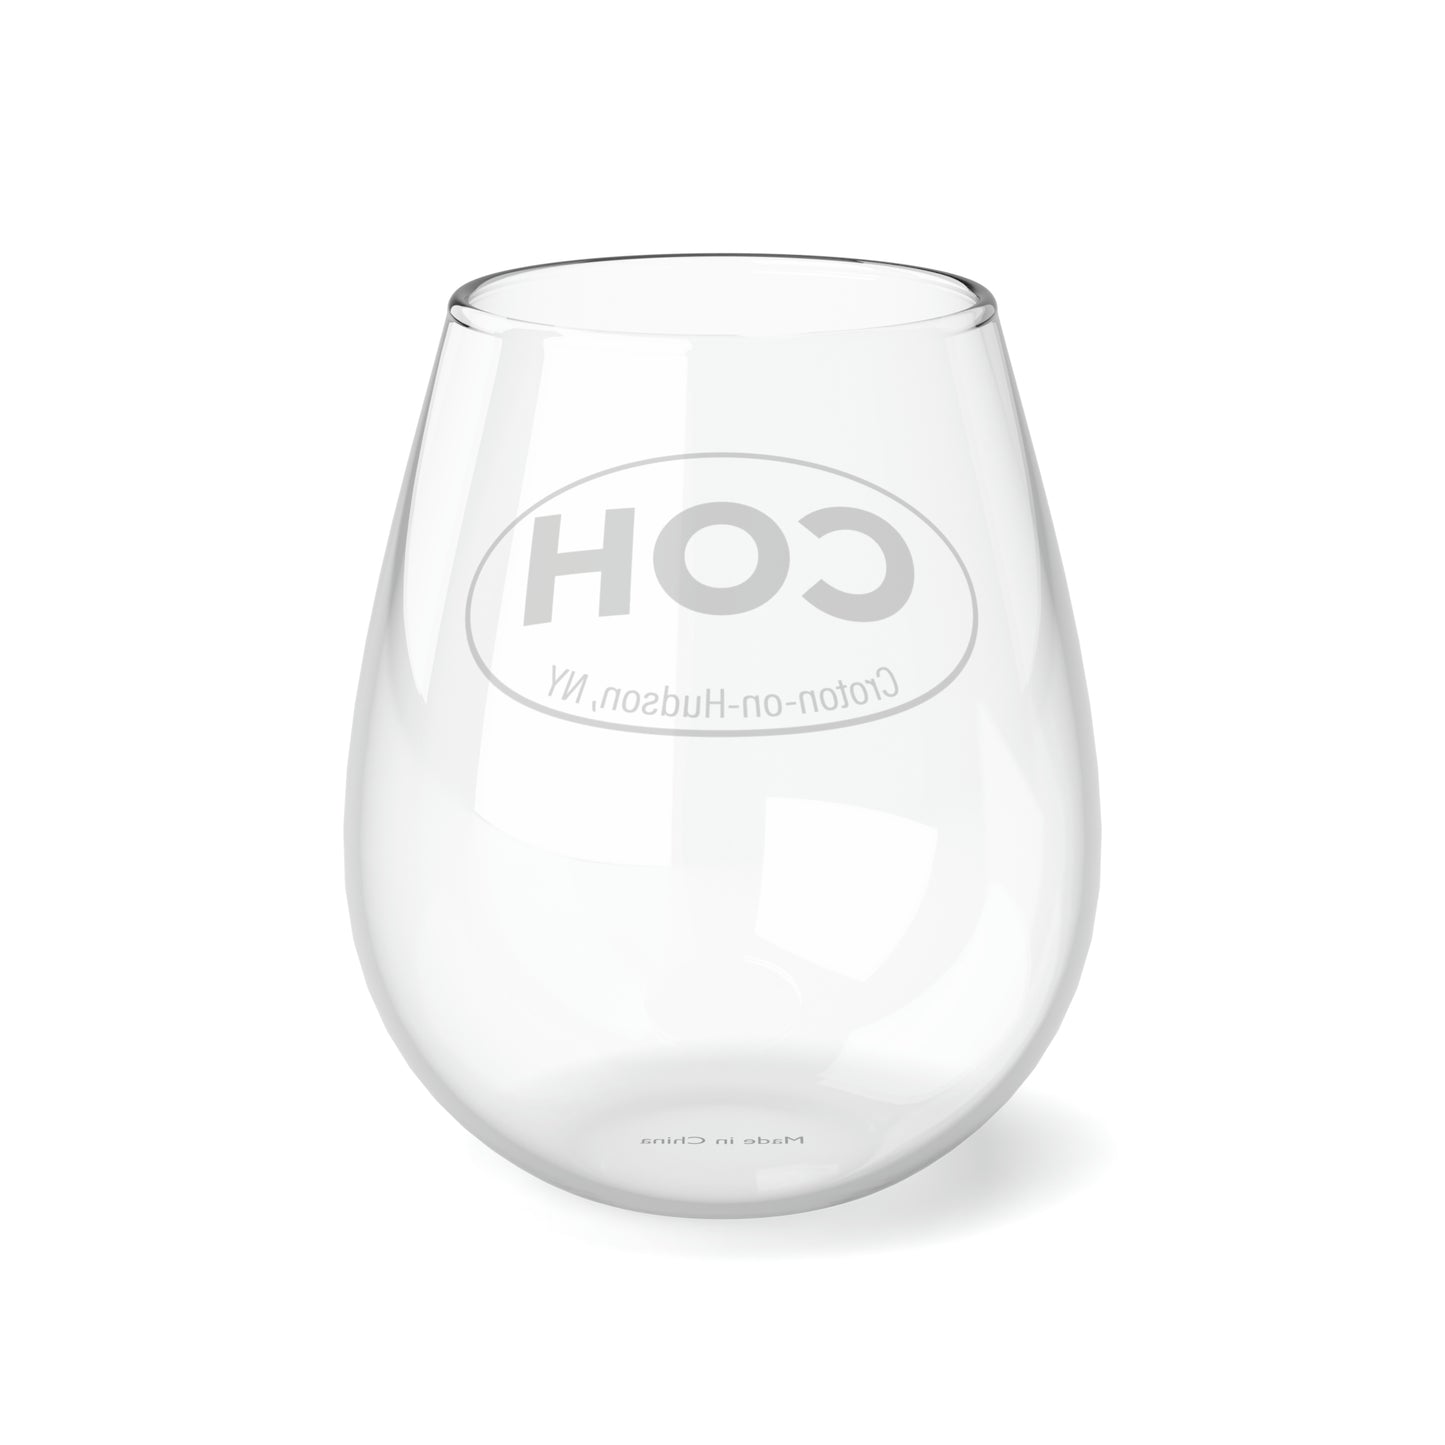 COH classic Croton-on-Hudson glass